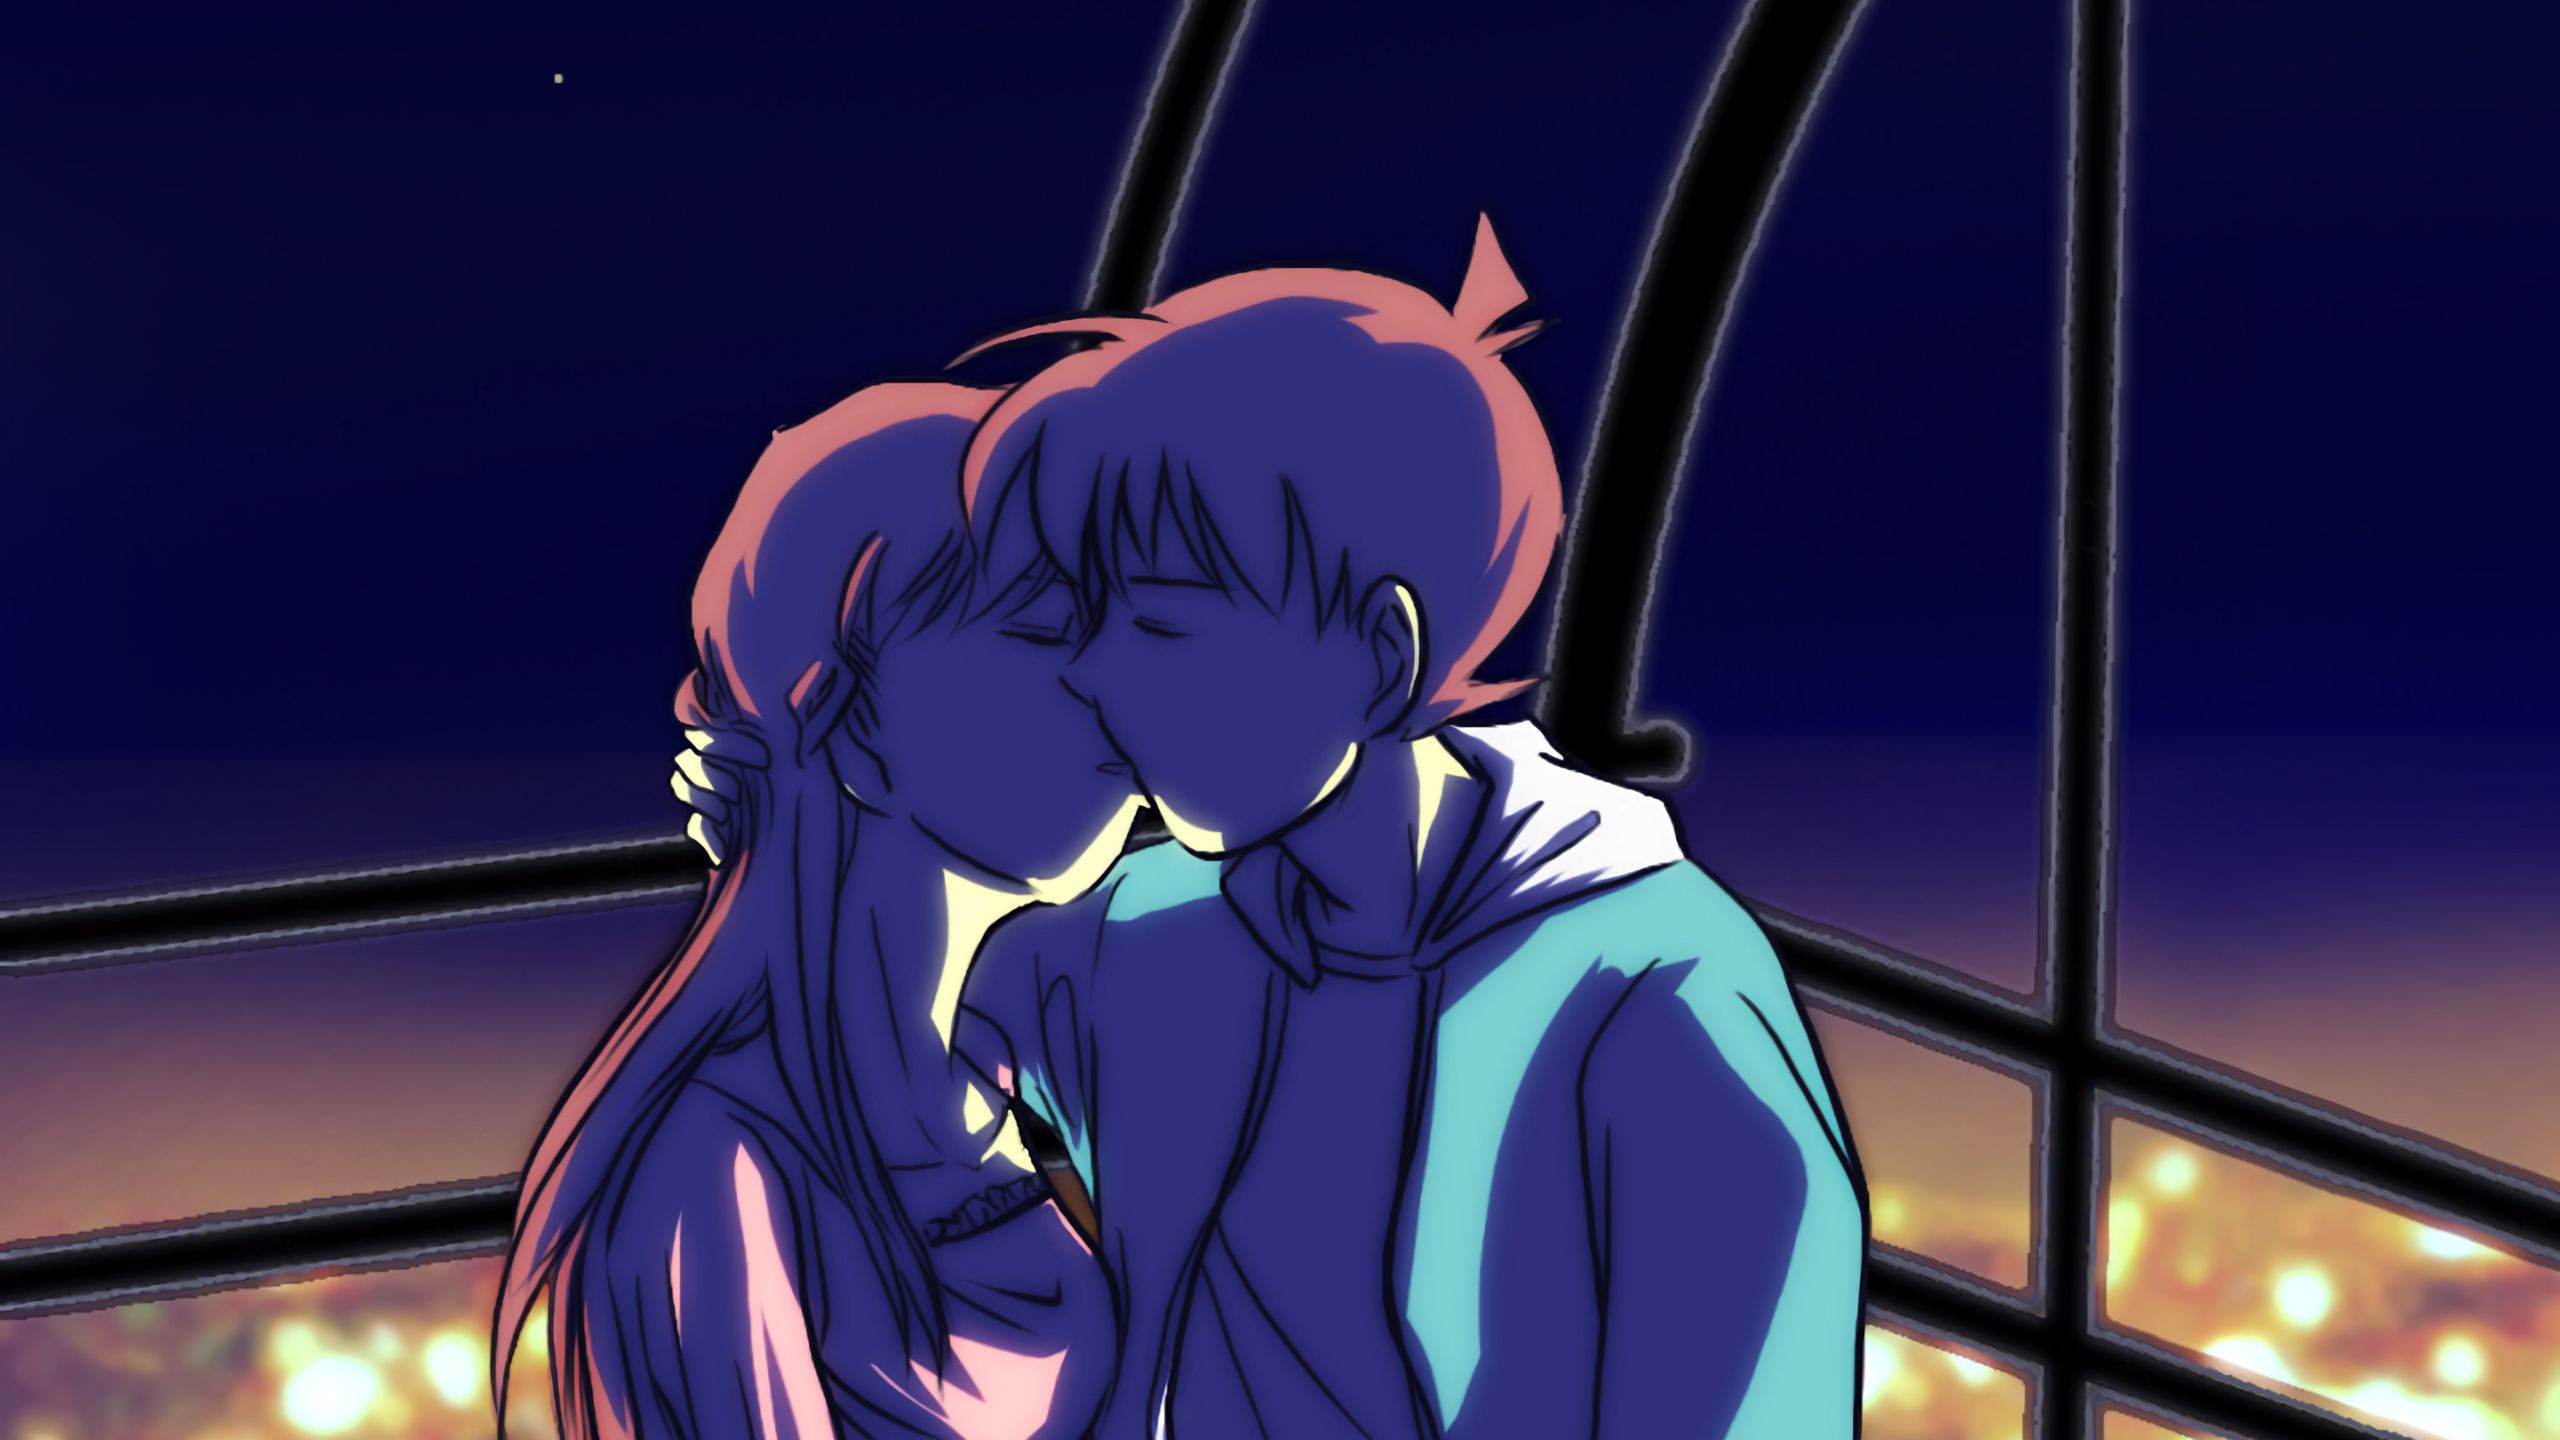 Download wallpaper 2560x1440 couple, kiss, art, love, anime widescreen 16:9 HD background